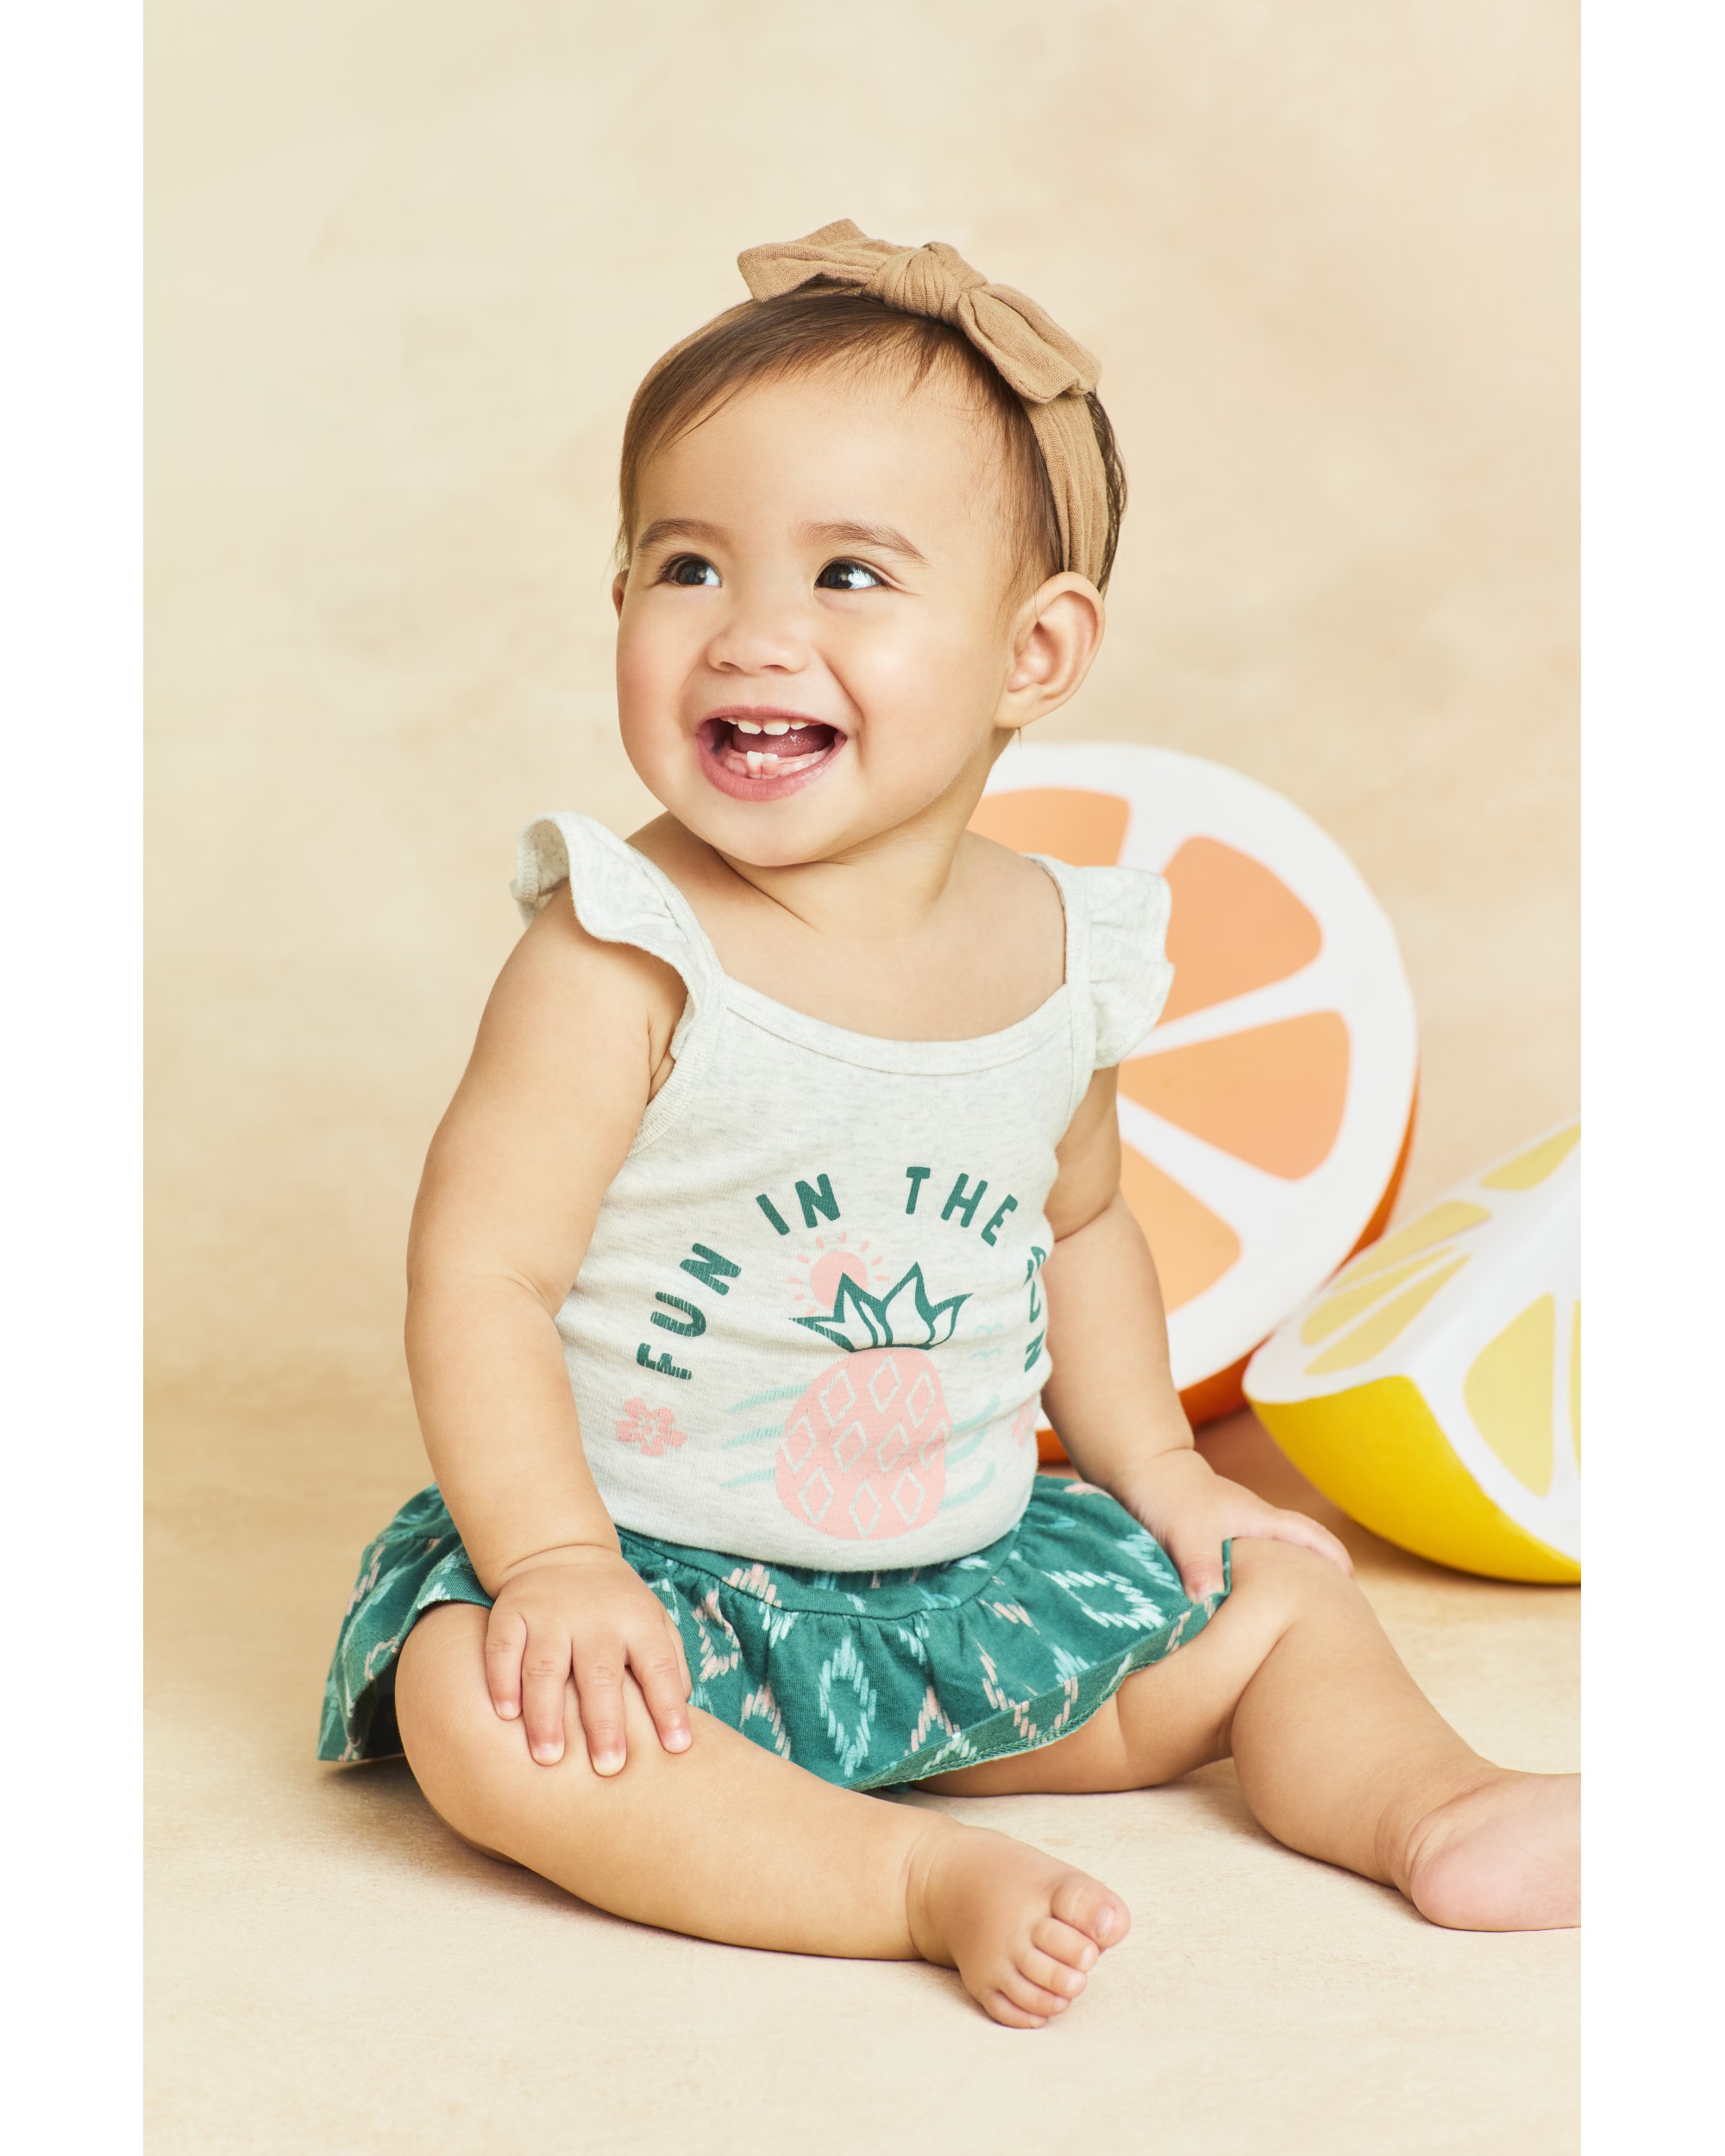 Baby 2-Piece Pineapple Bodysuit & Diaper Cover Set